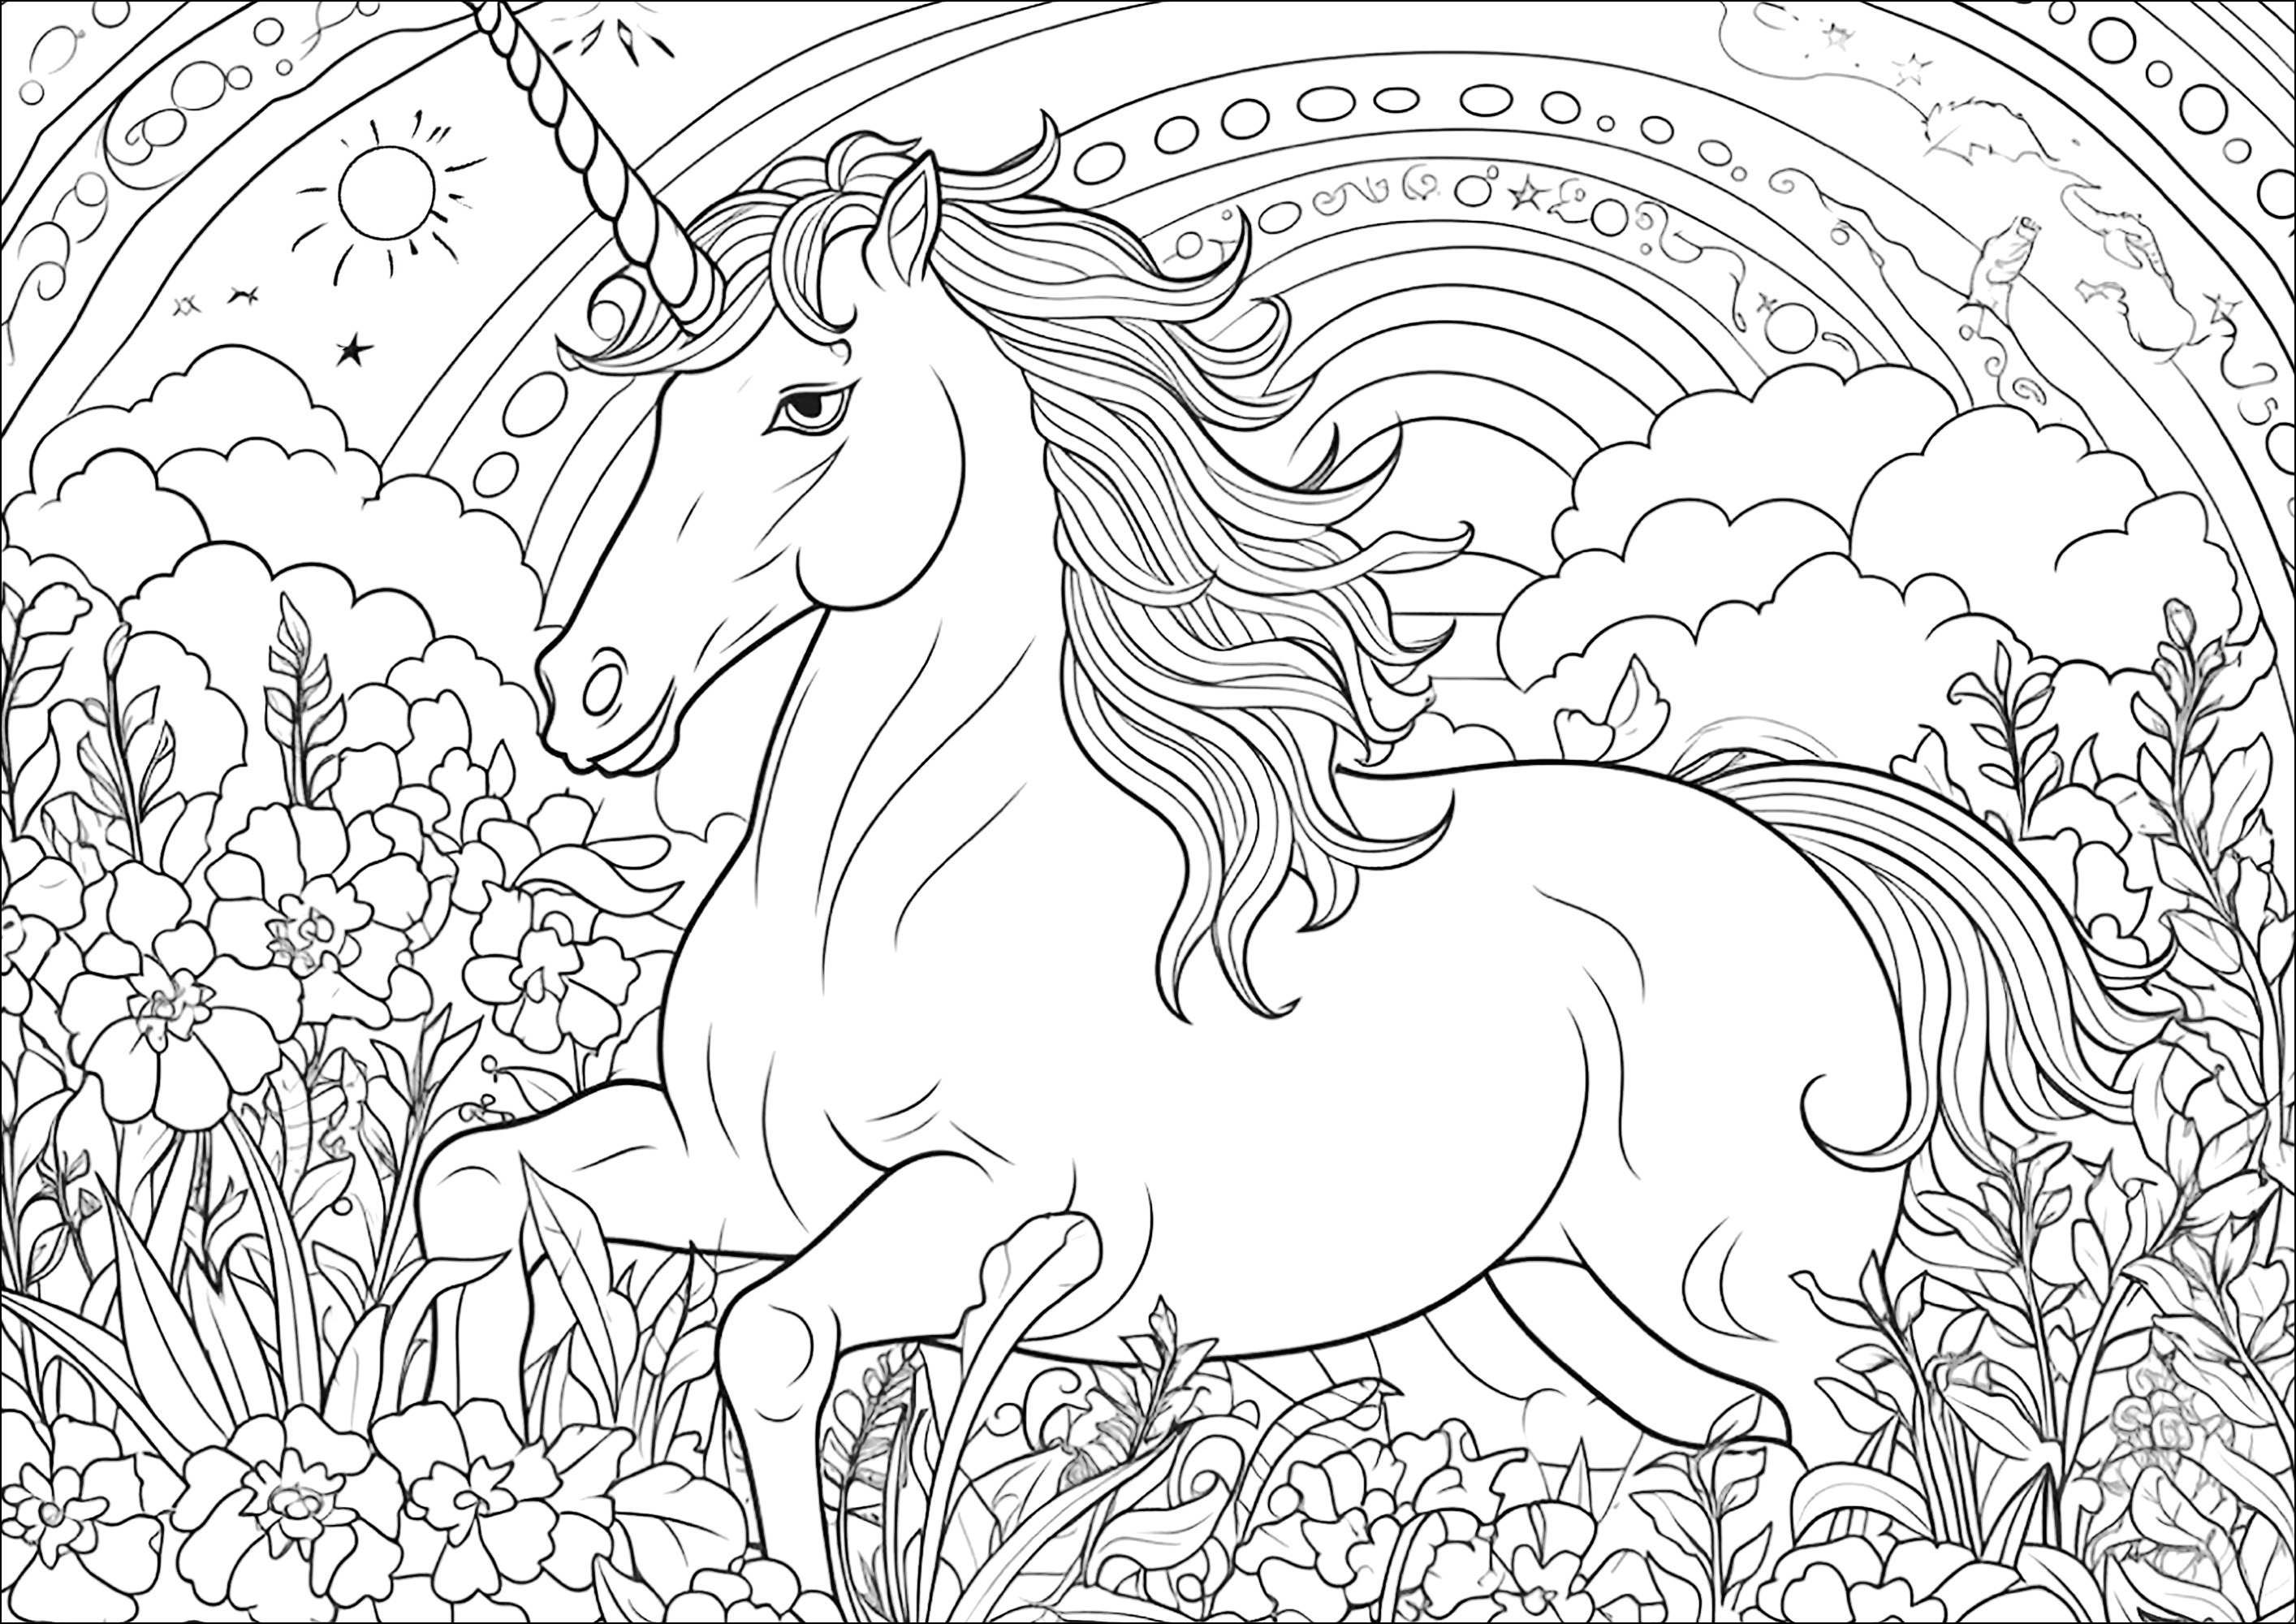 Unicornio galopante con arco iris y vegetación